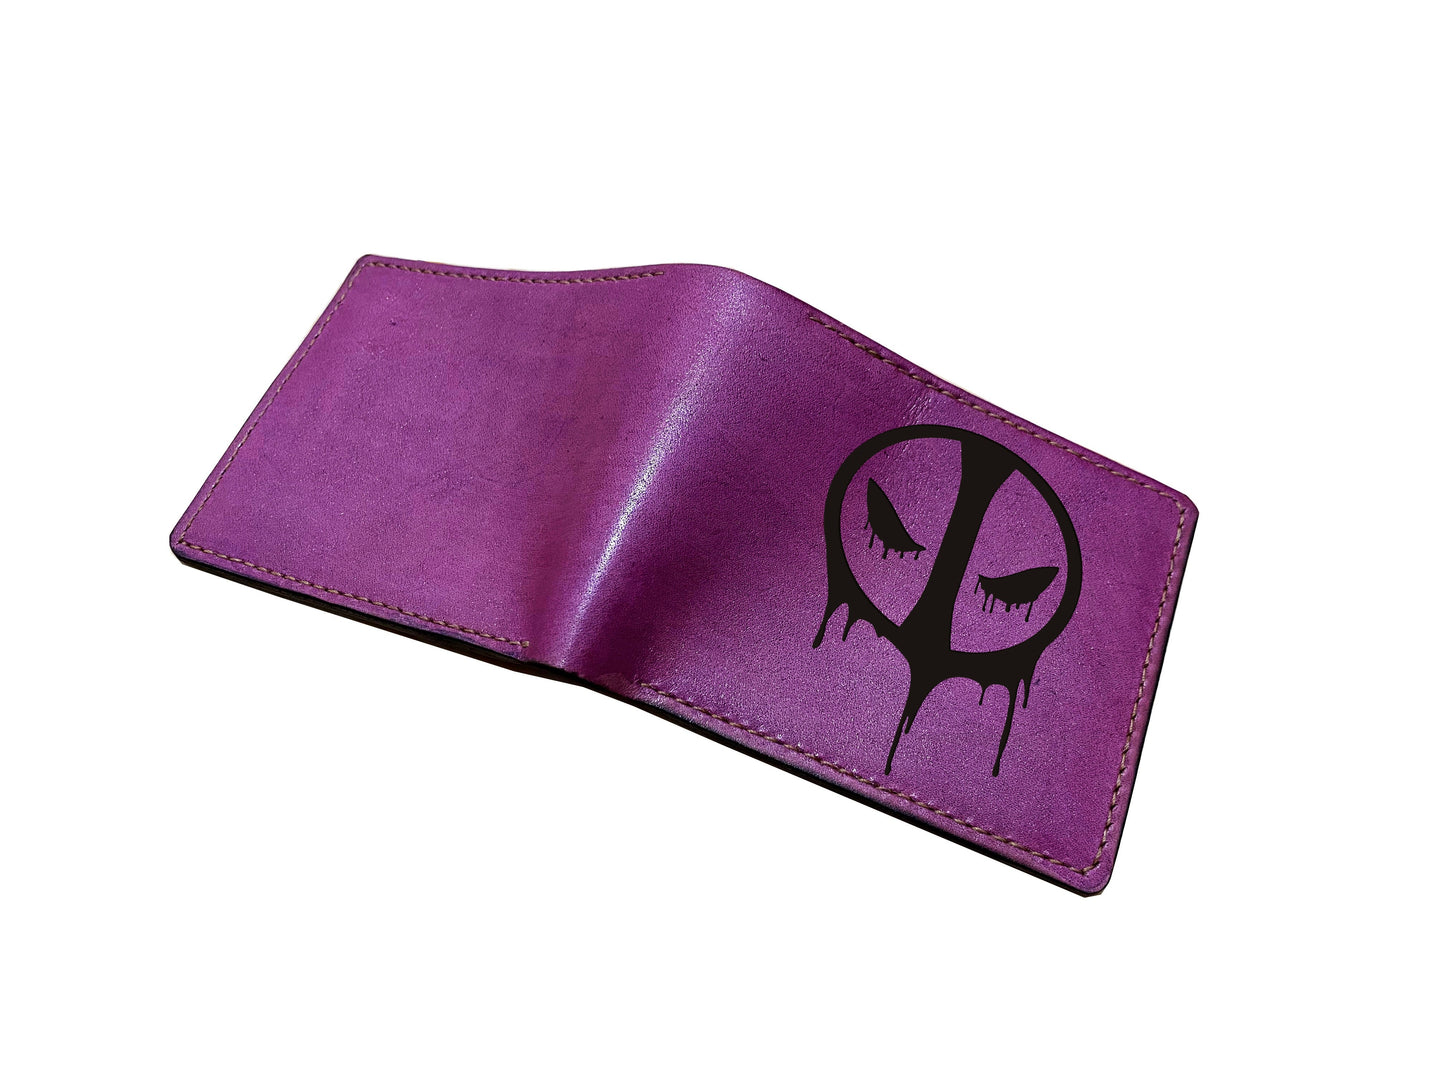 Deadpool superheroes leather wallet, deadpool leather gift ideas, cool wallet for kid